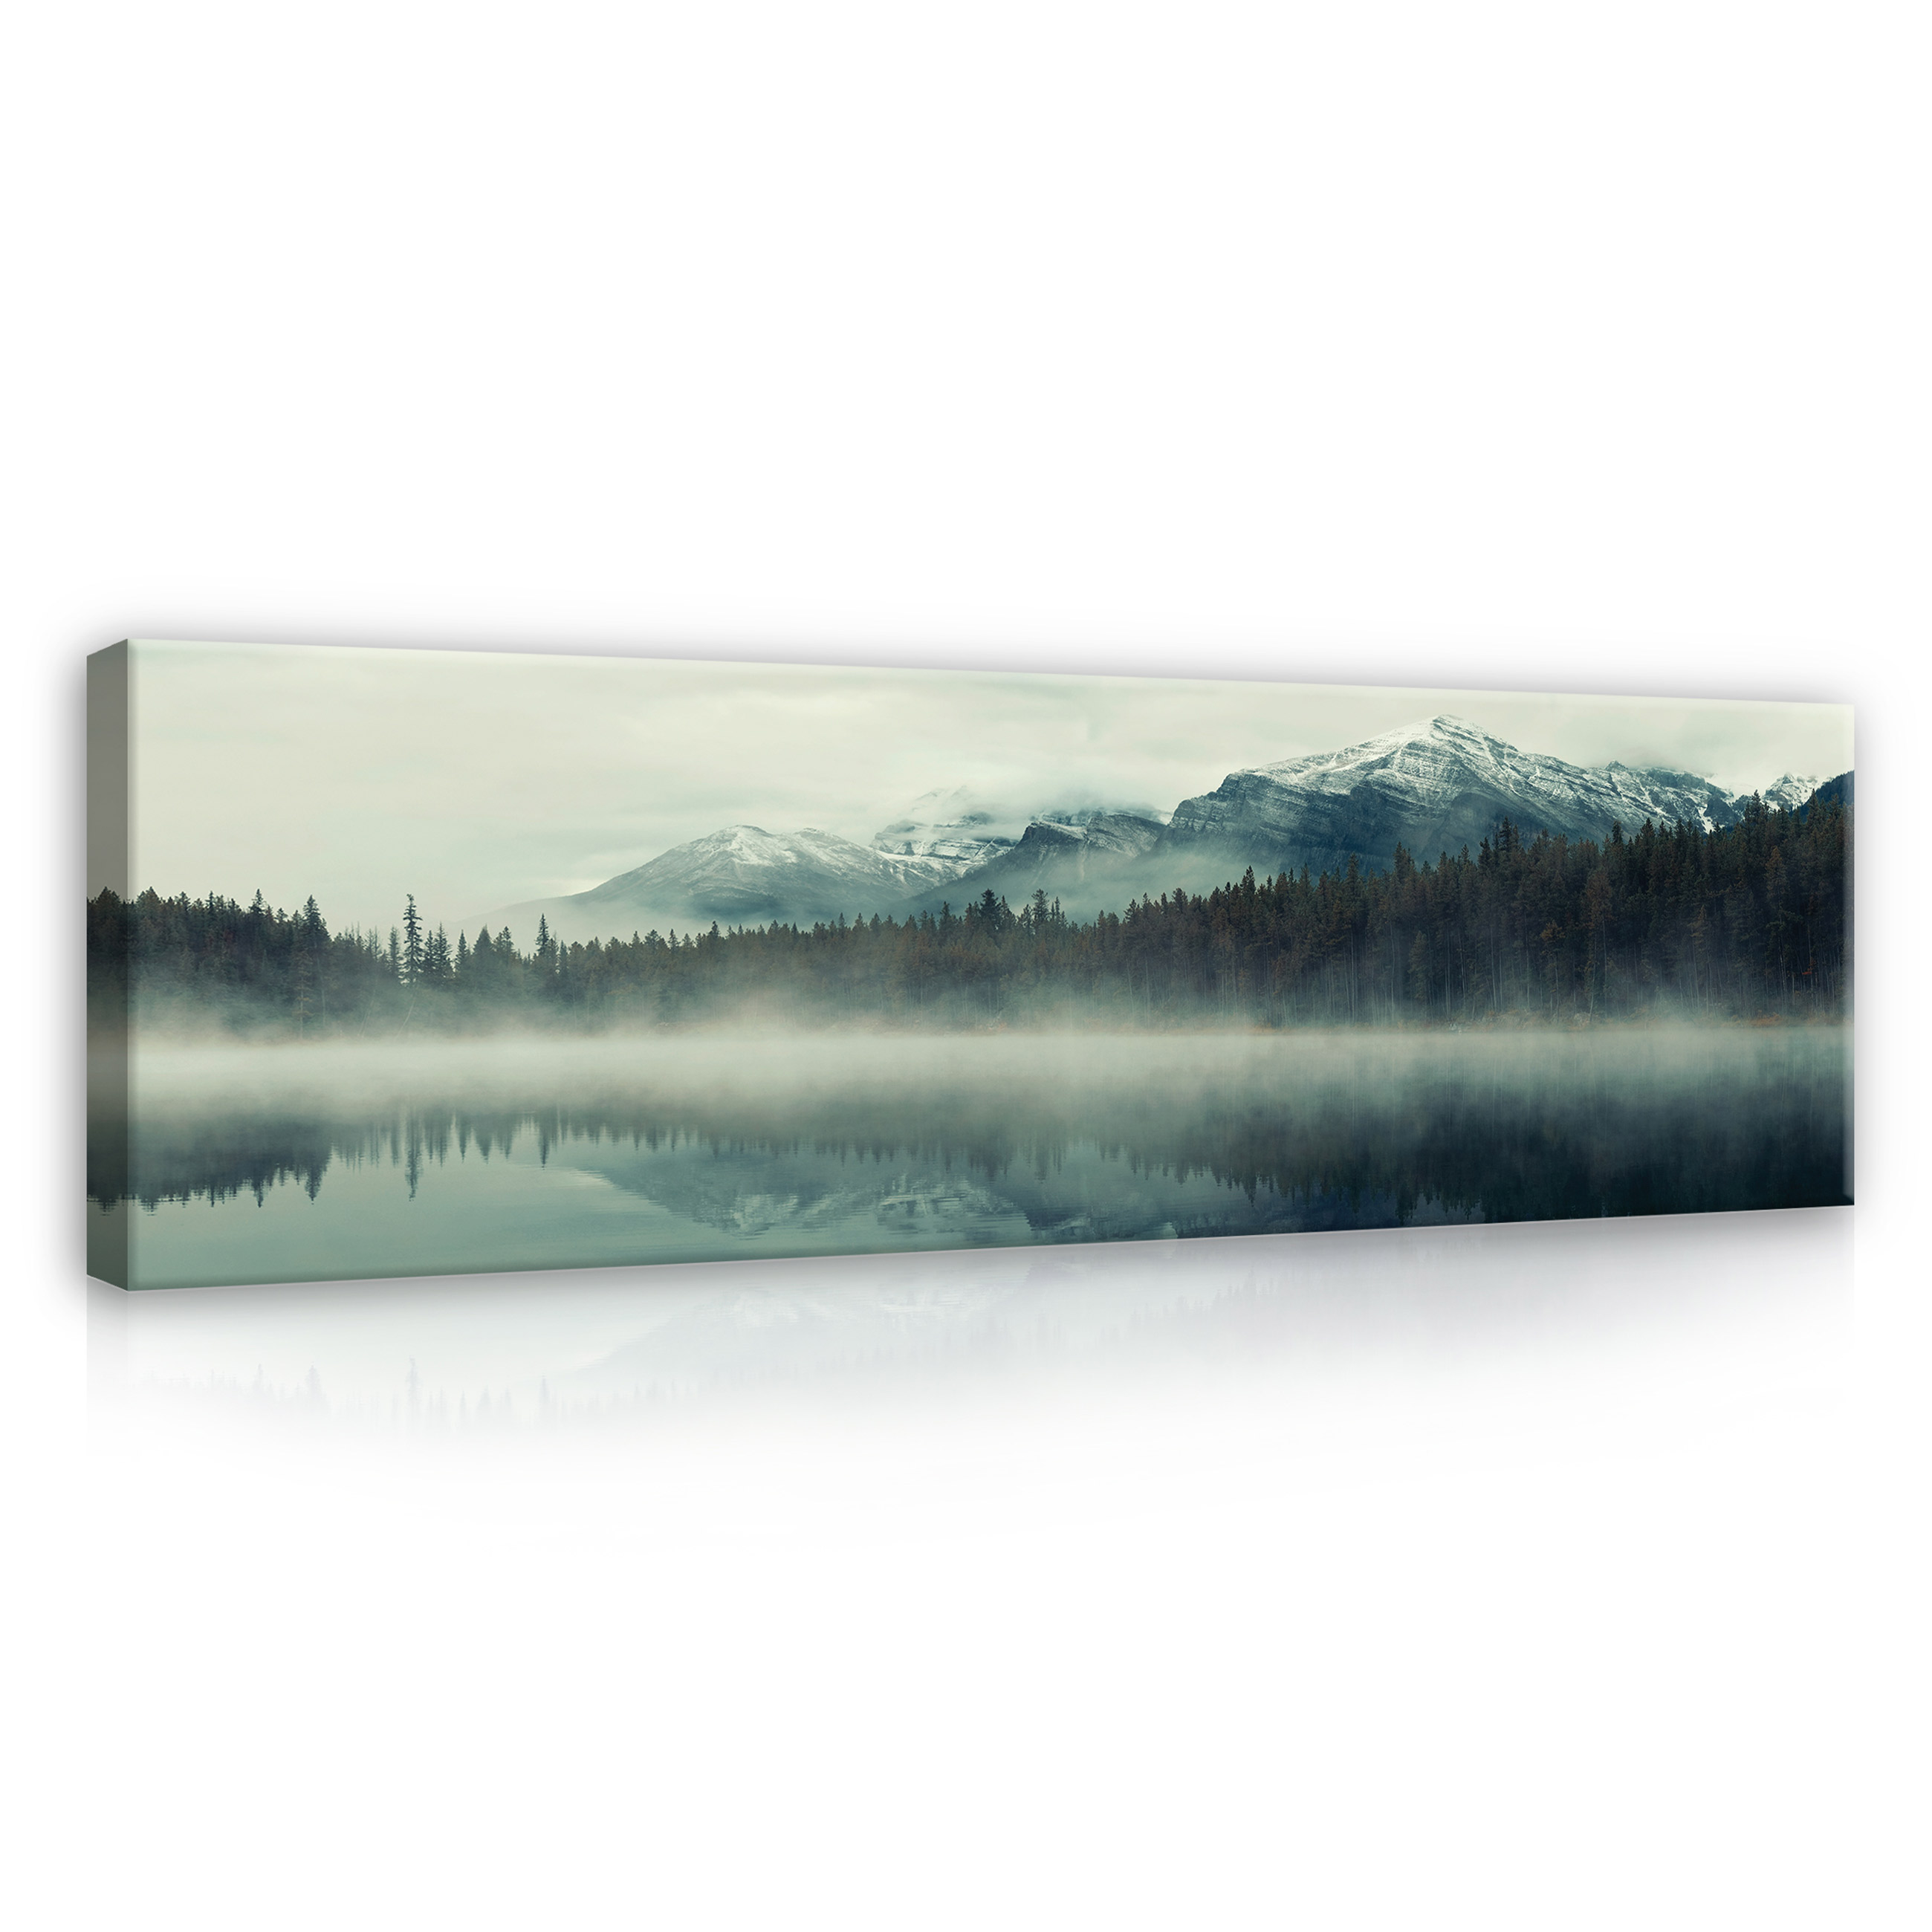 Leinwandbild Berge Nebel Wald Panorama kaufen | home24